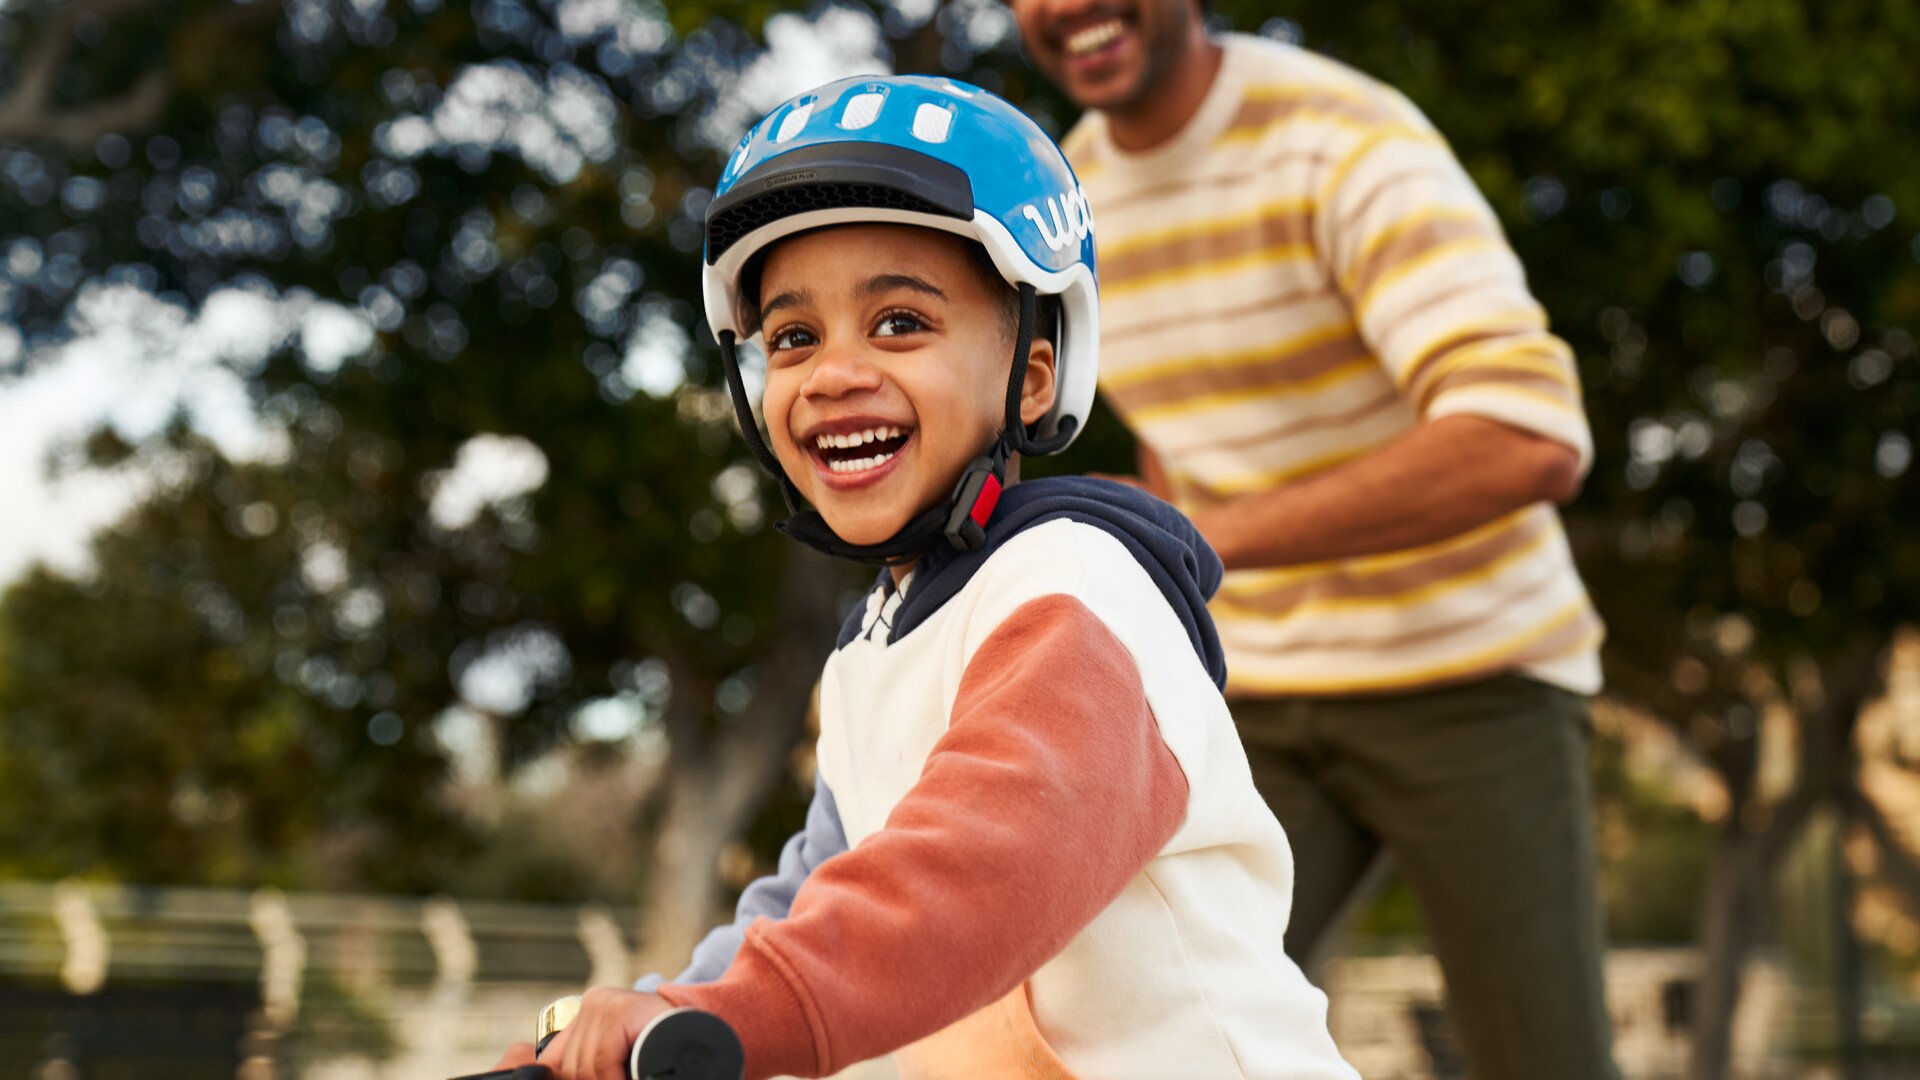 Et barn på cykel med blå cykelhjelm fra woom griner til kameraet.